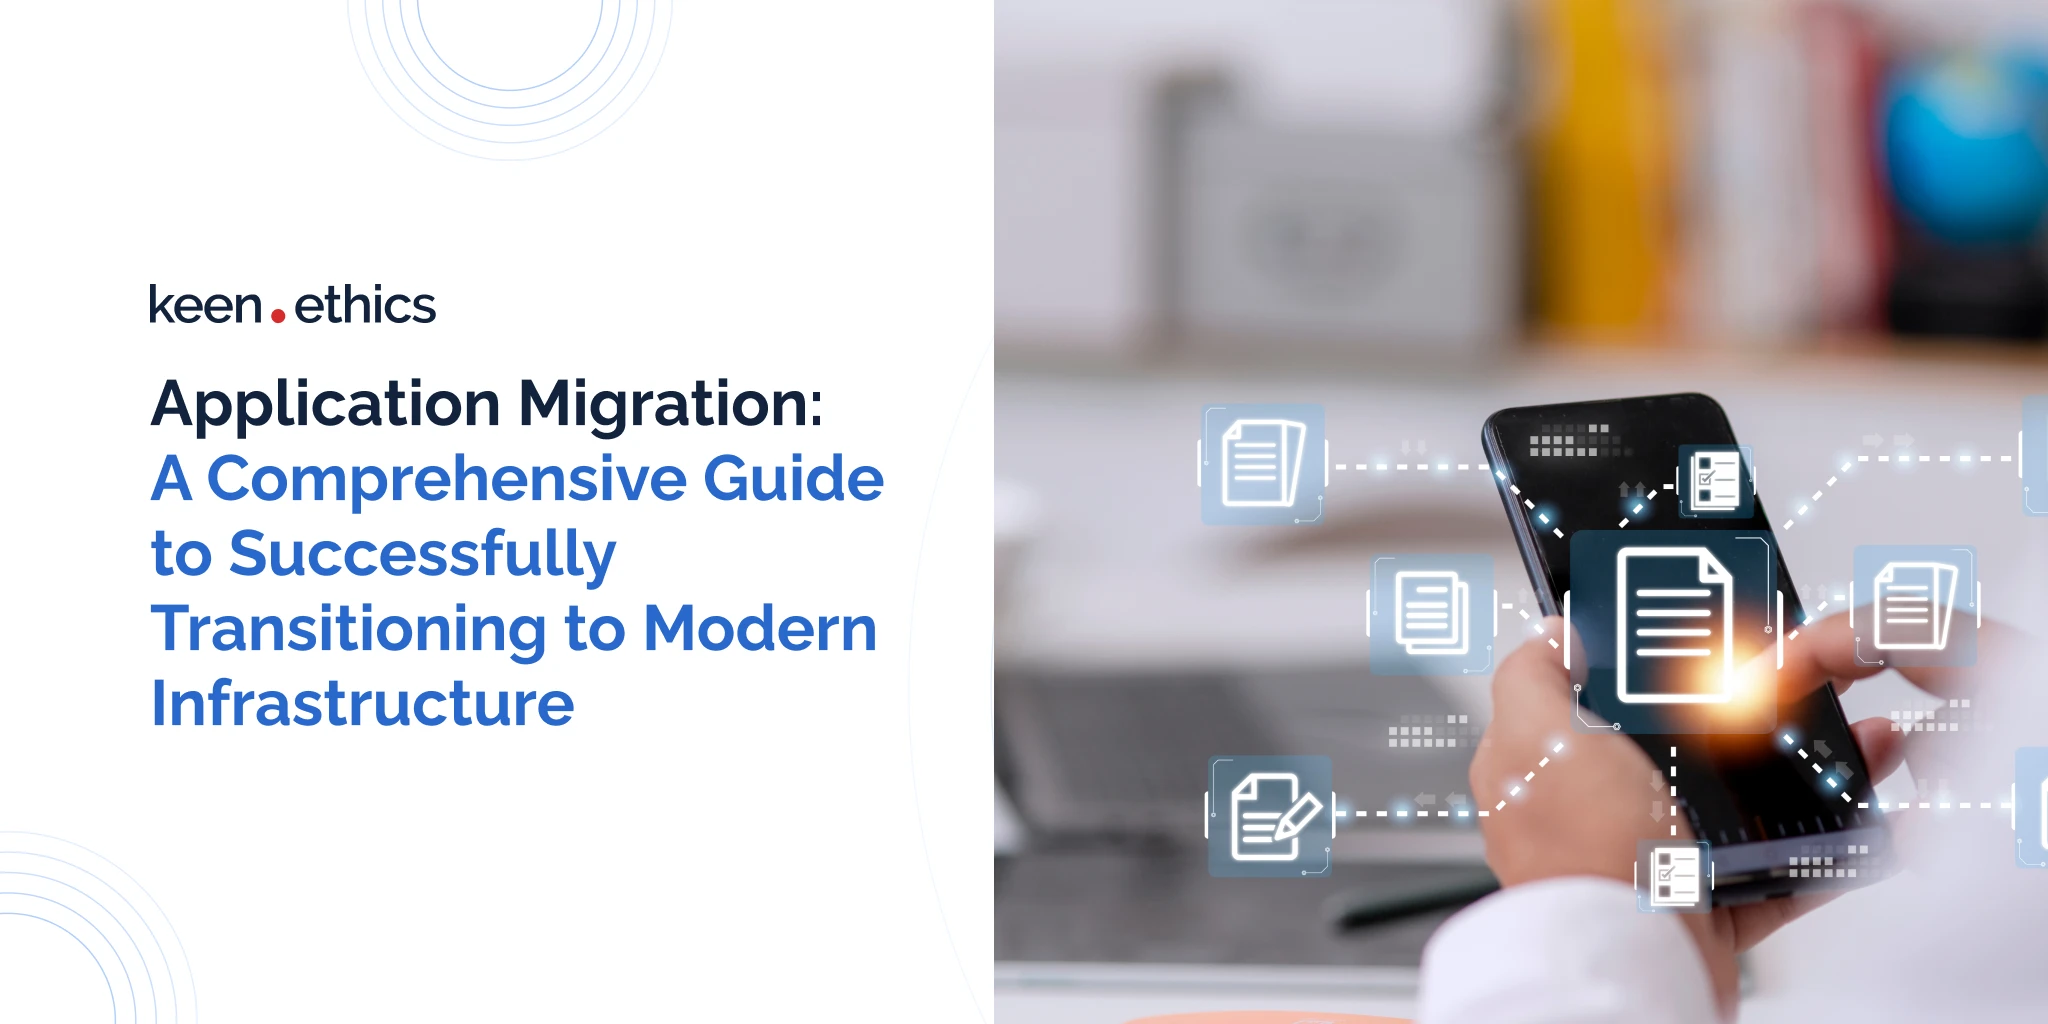 app migration a comprehensive guide